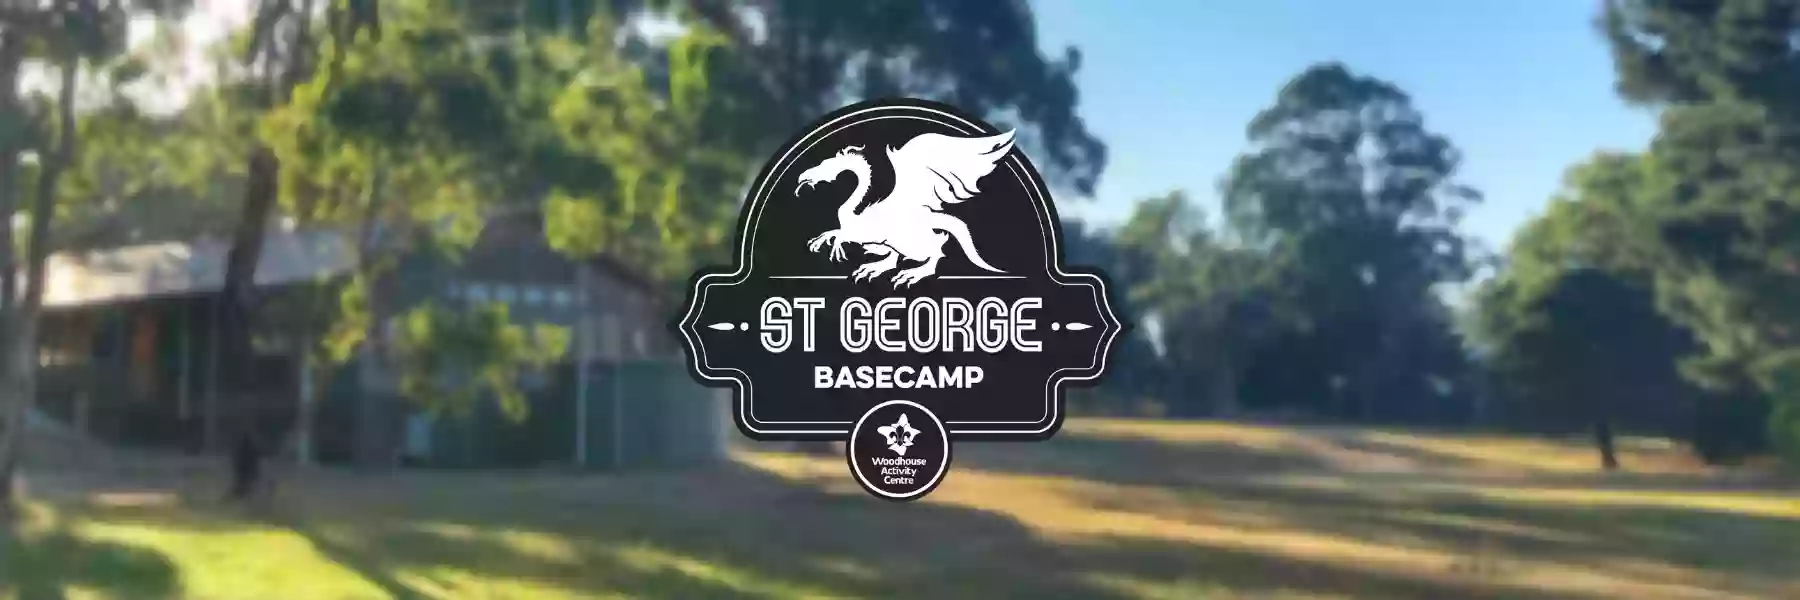 St George Basecamp - Woodhouse Adventure Park